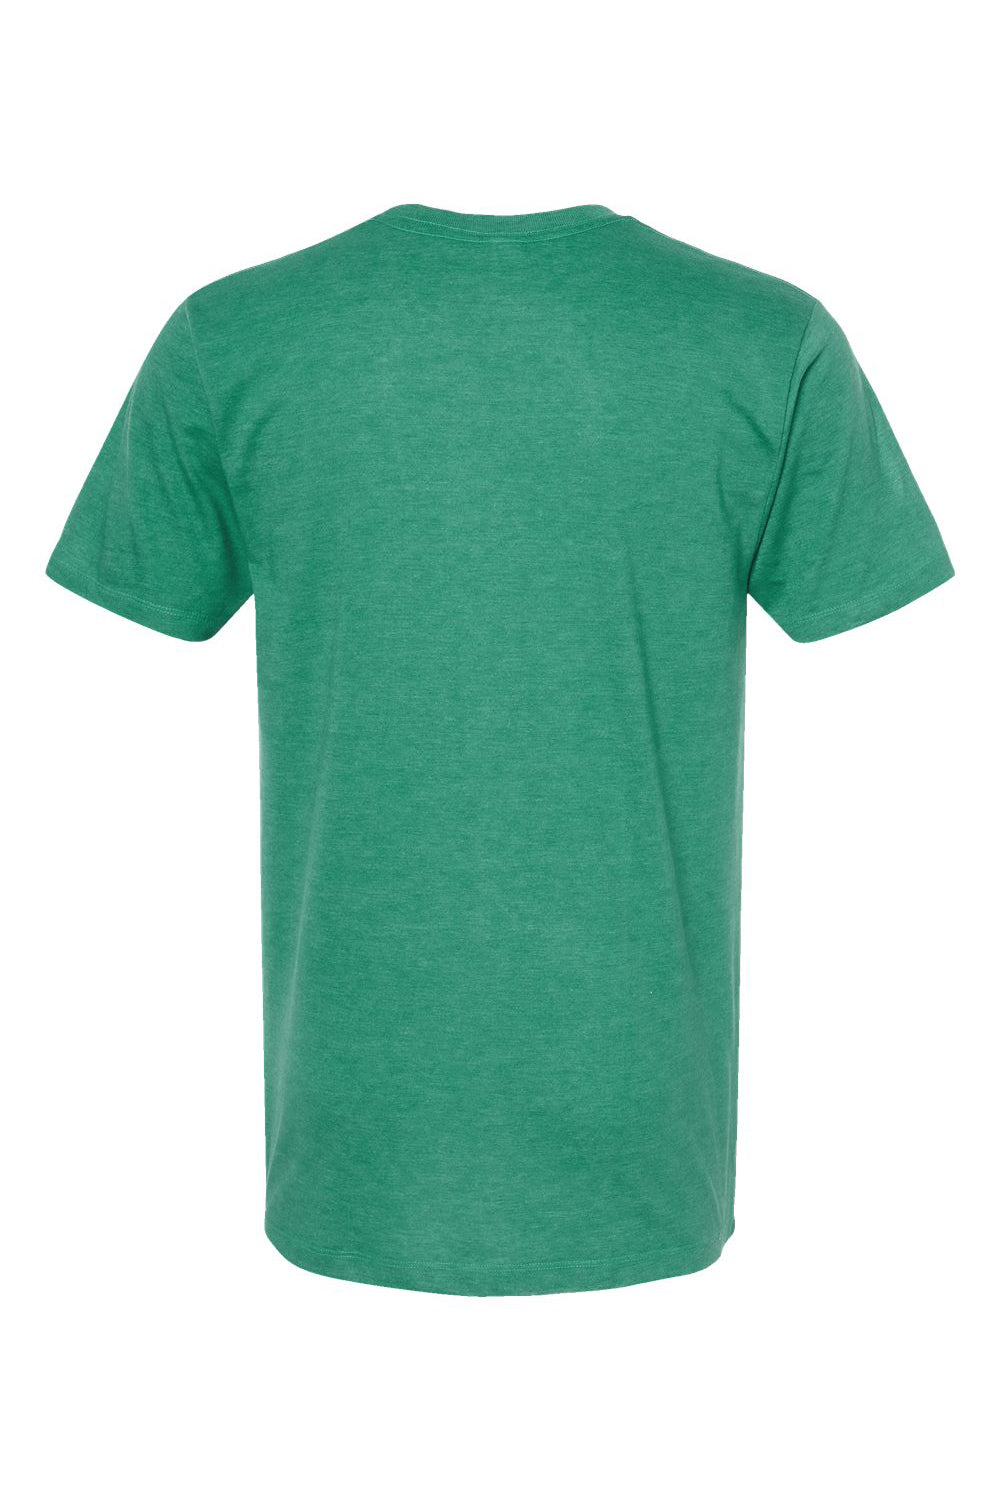 Tultex 541 Mens Premium Short Sleeve Crewneck T-Shirt Heather Kelly Green Flat Back